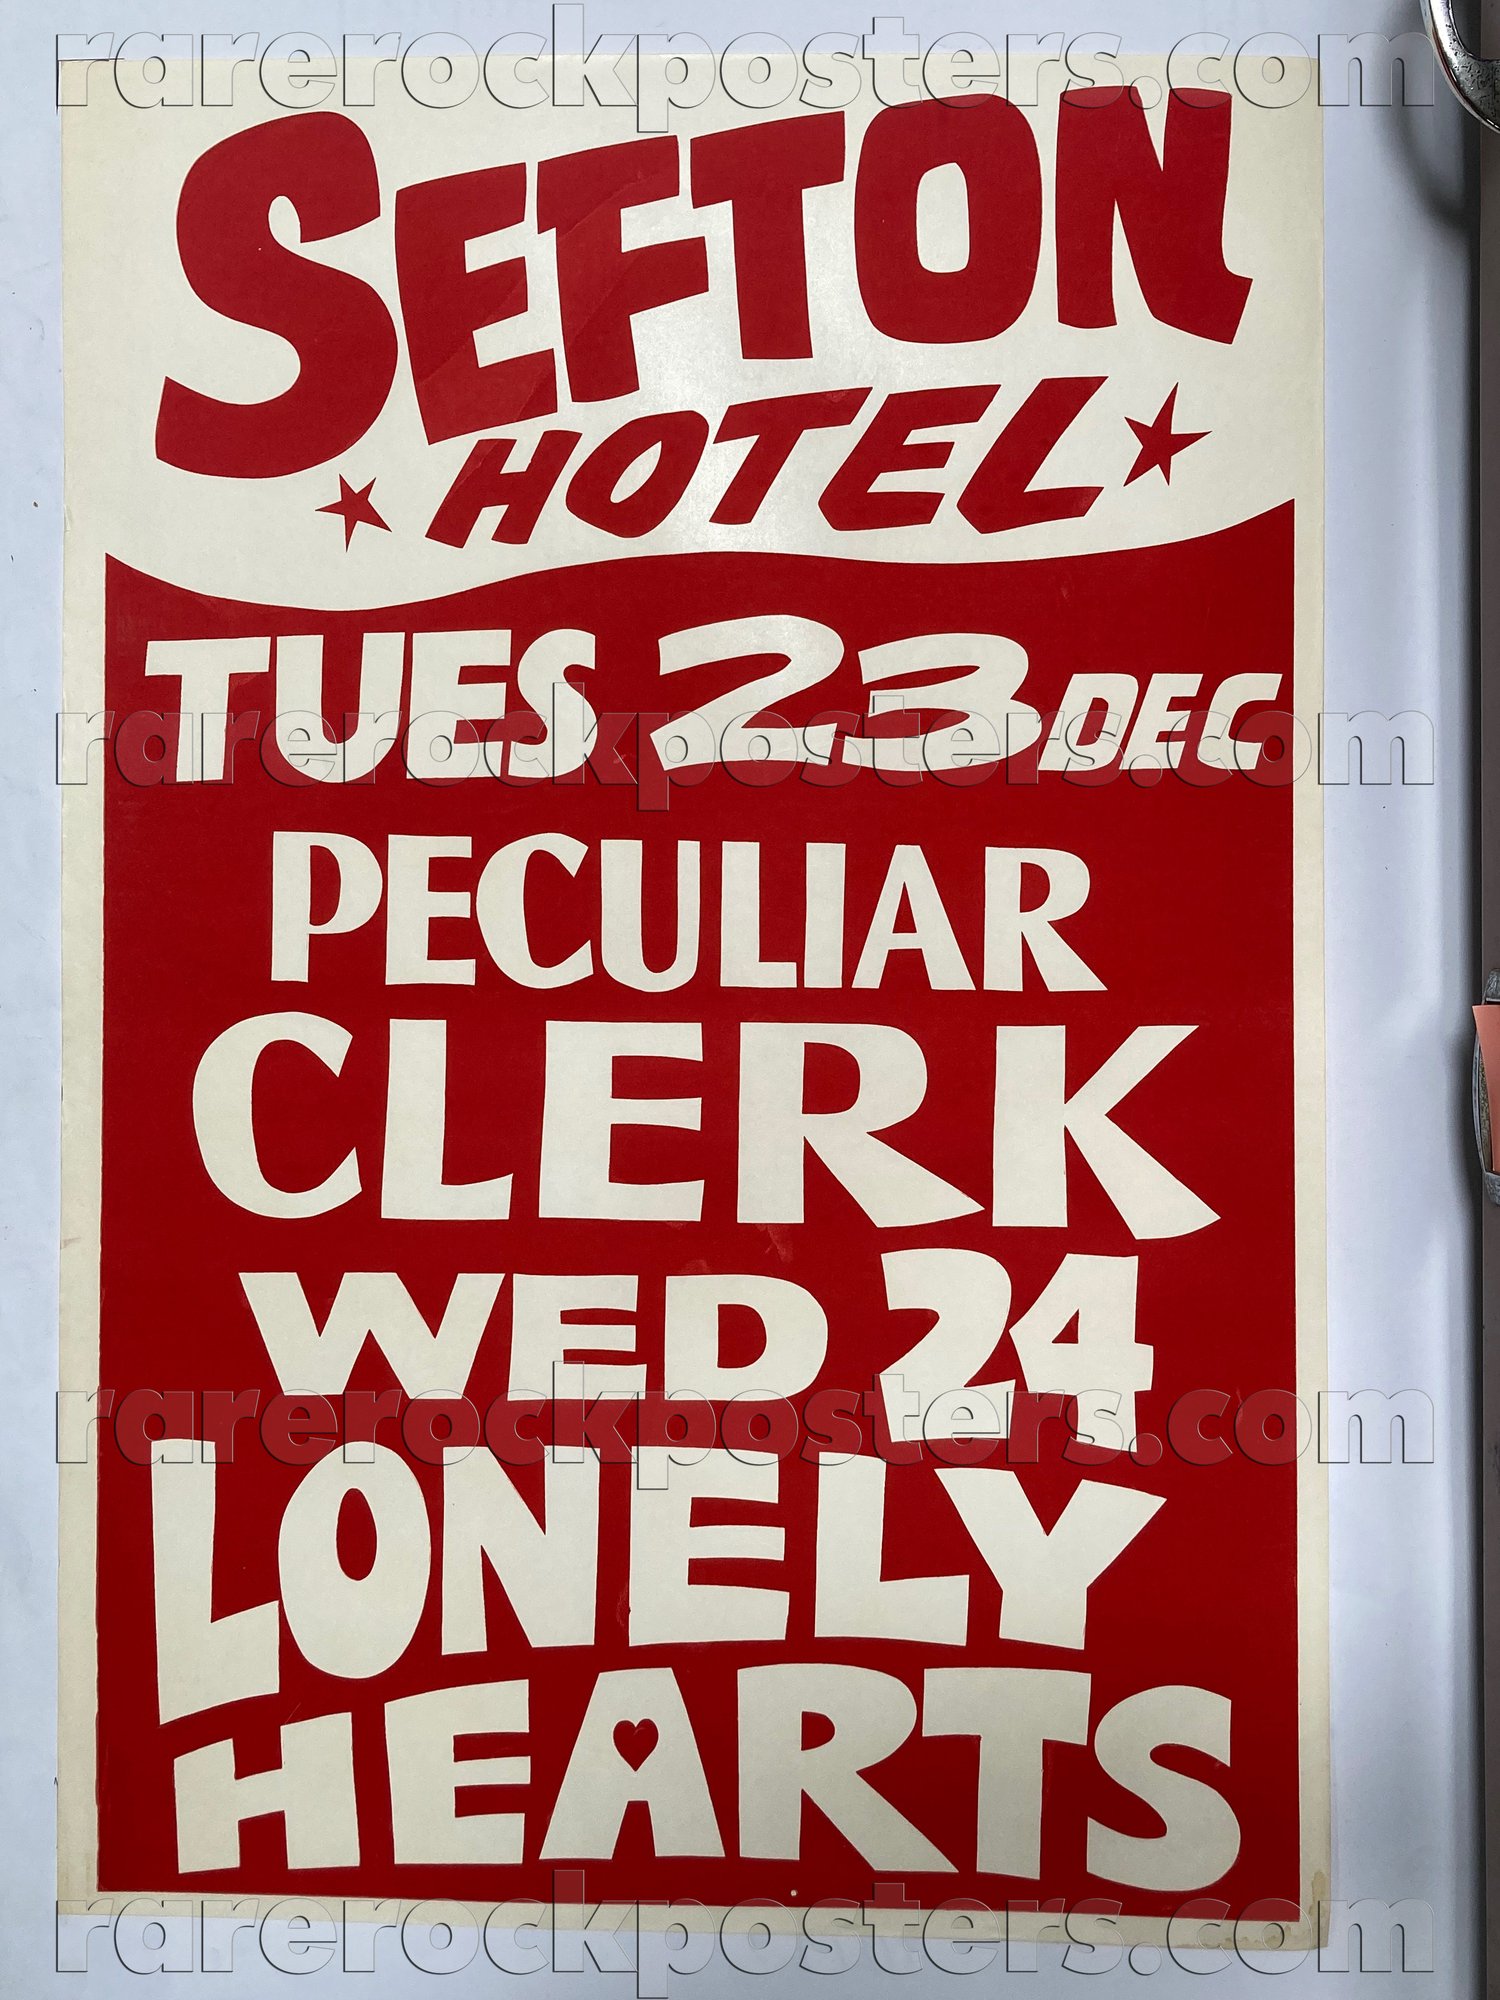 LONELY HEARTS / PECULIAR CLERK ~ ORIGINAL 1980 AUST GIG POSTER ~ SEFTON HOTEL